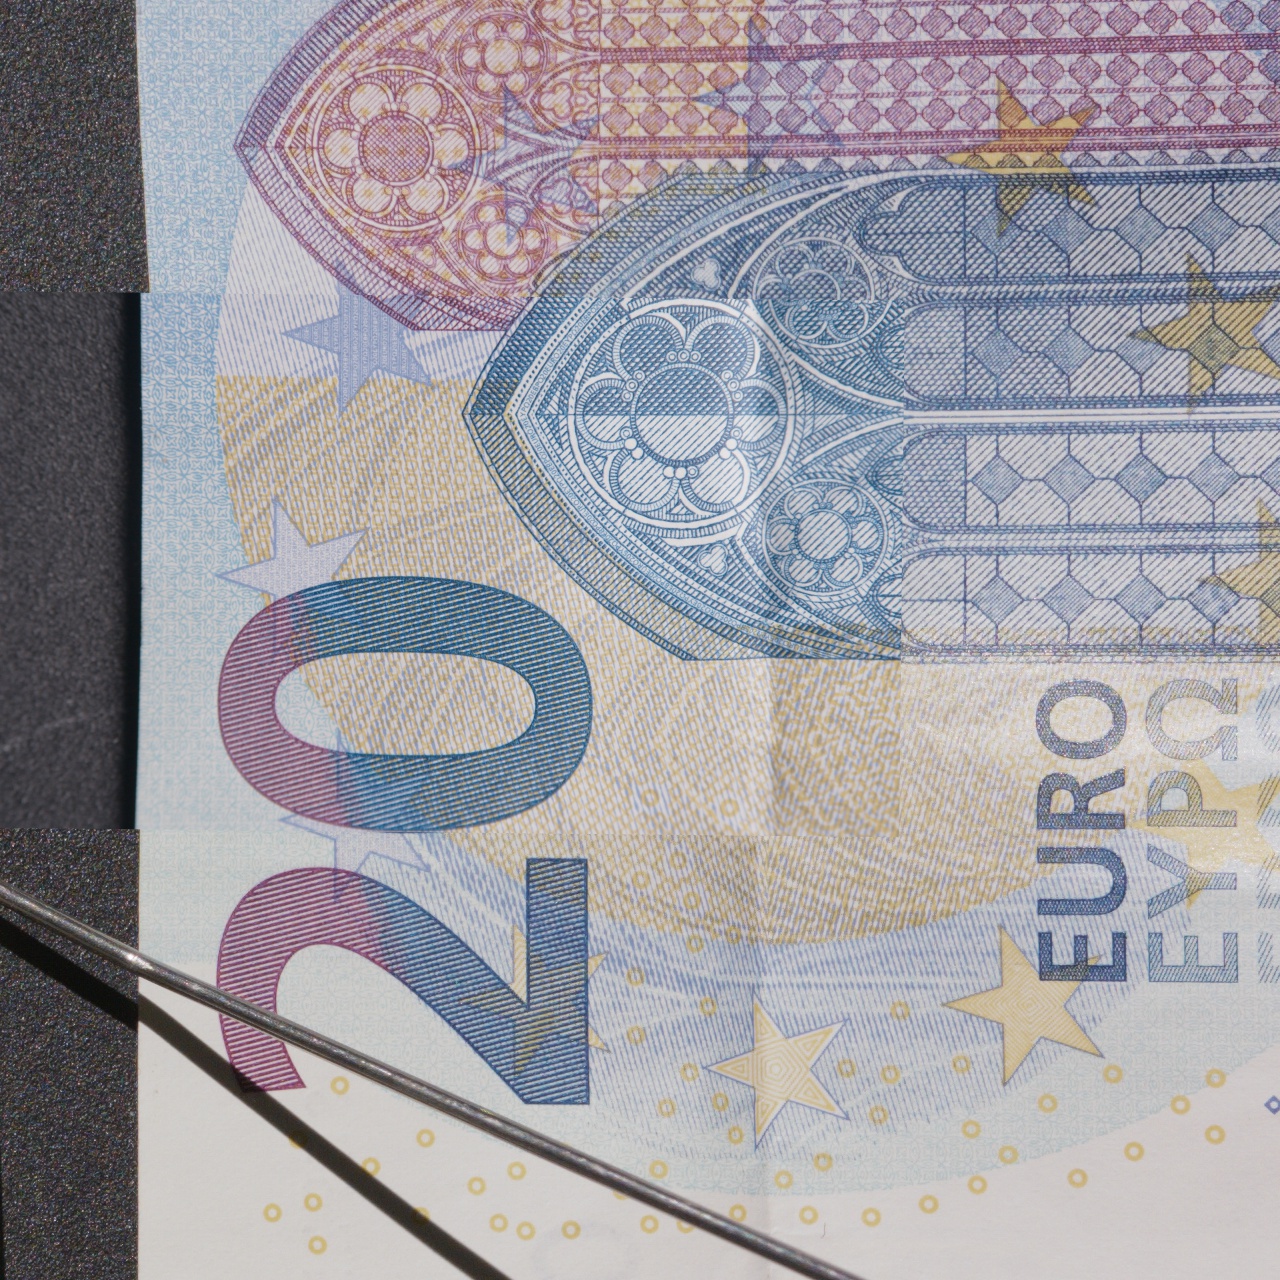 Euro_Banknotes_Detail_Macro_overlaid.jpg